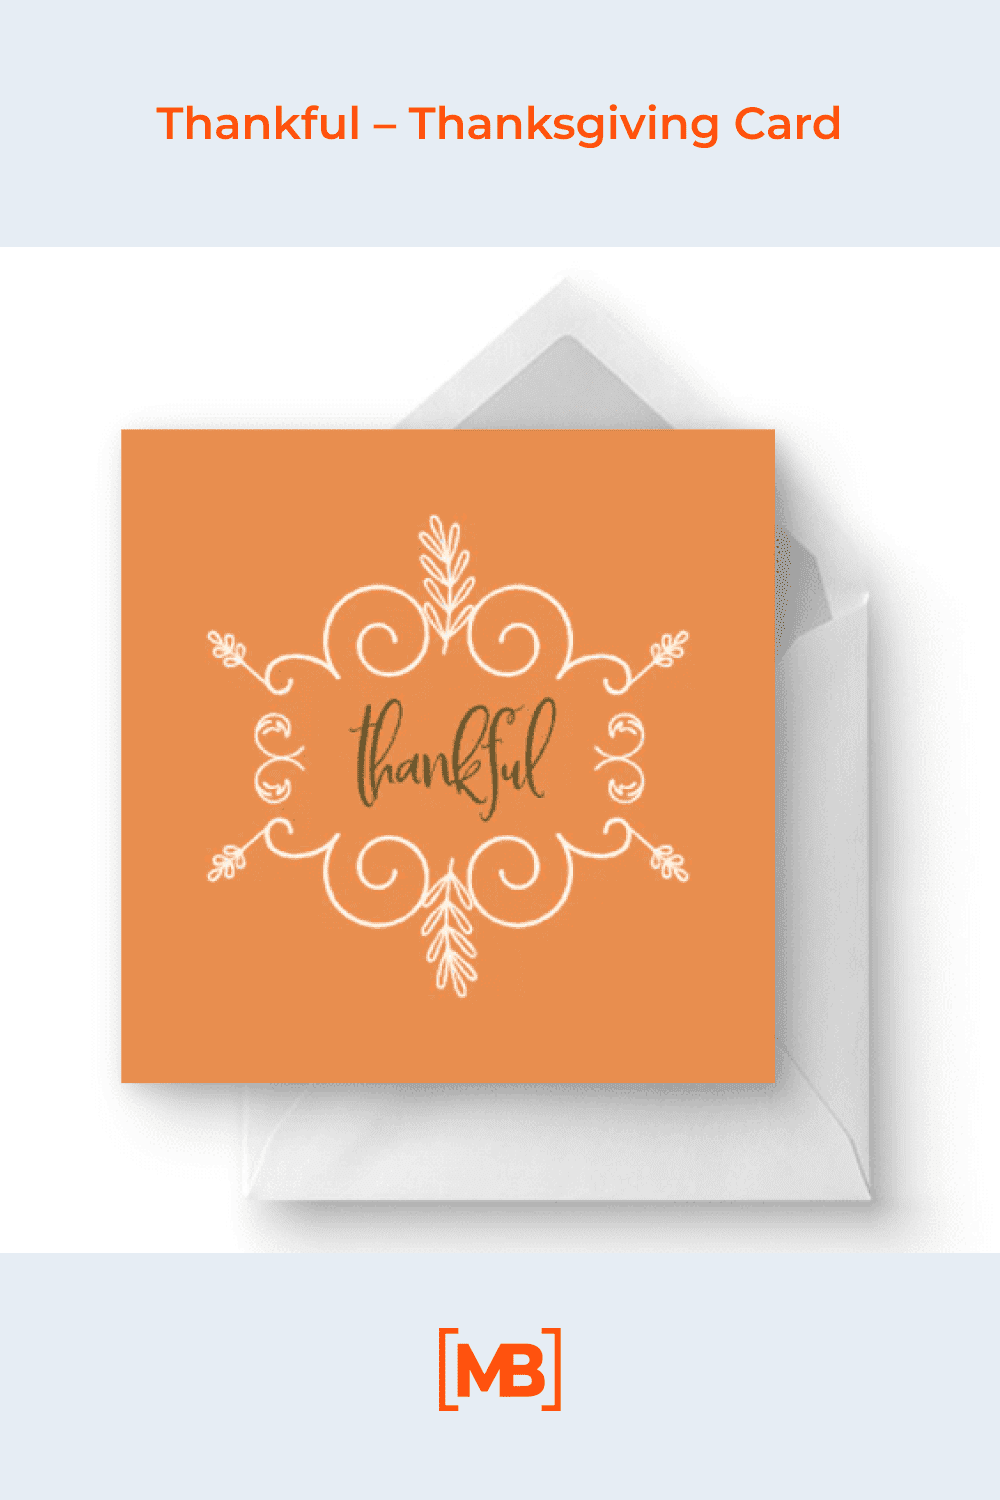 Thankful - Thanksgiving card.